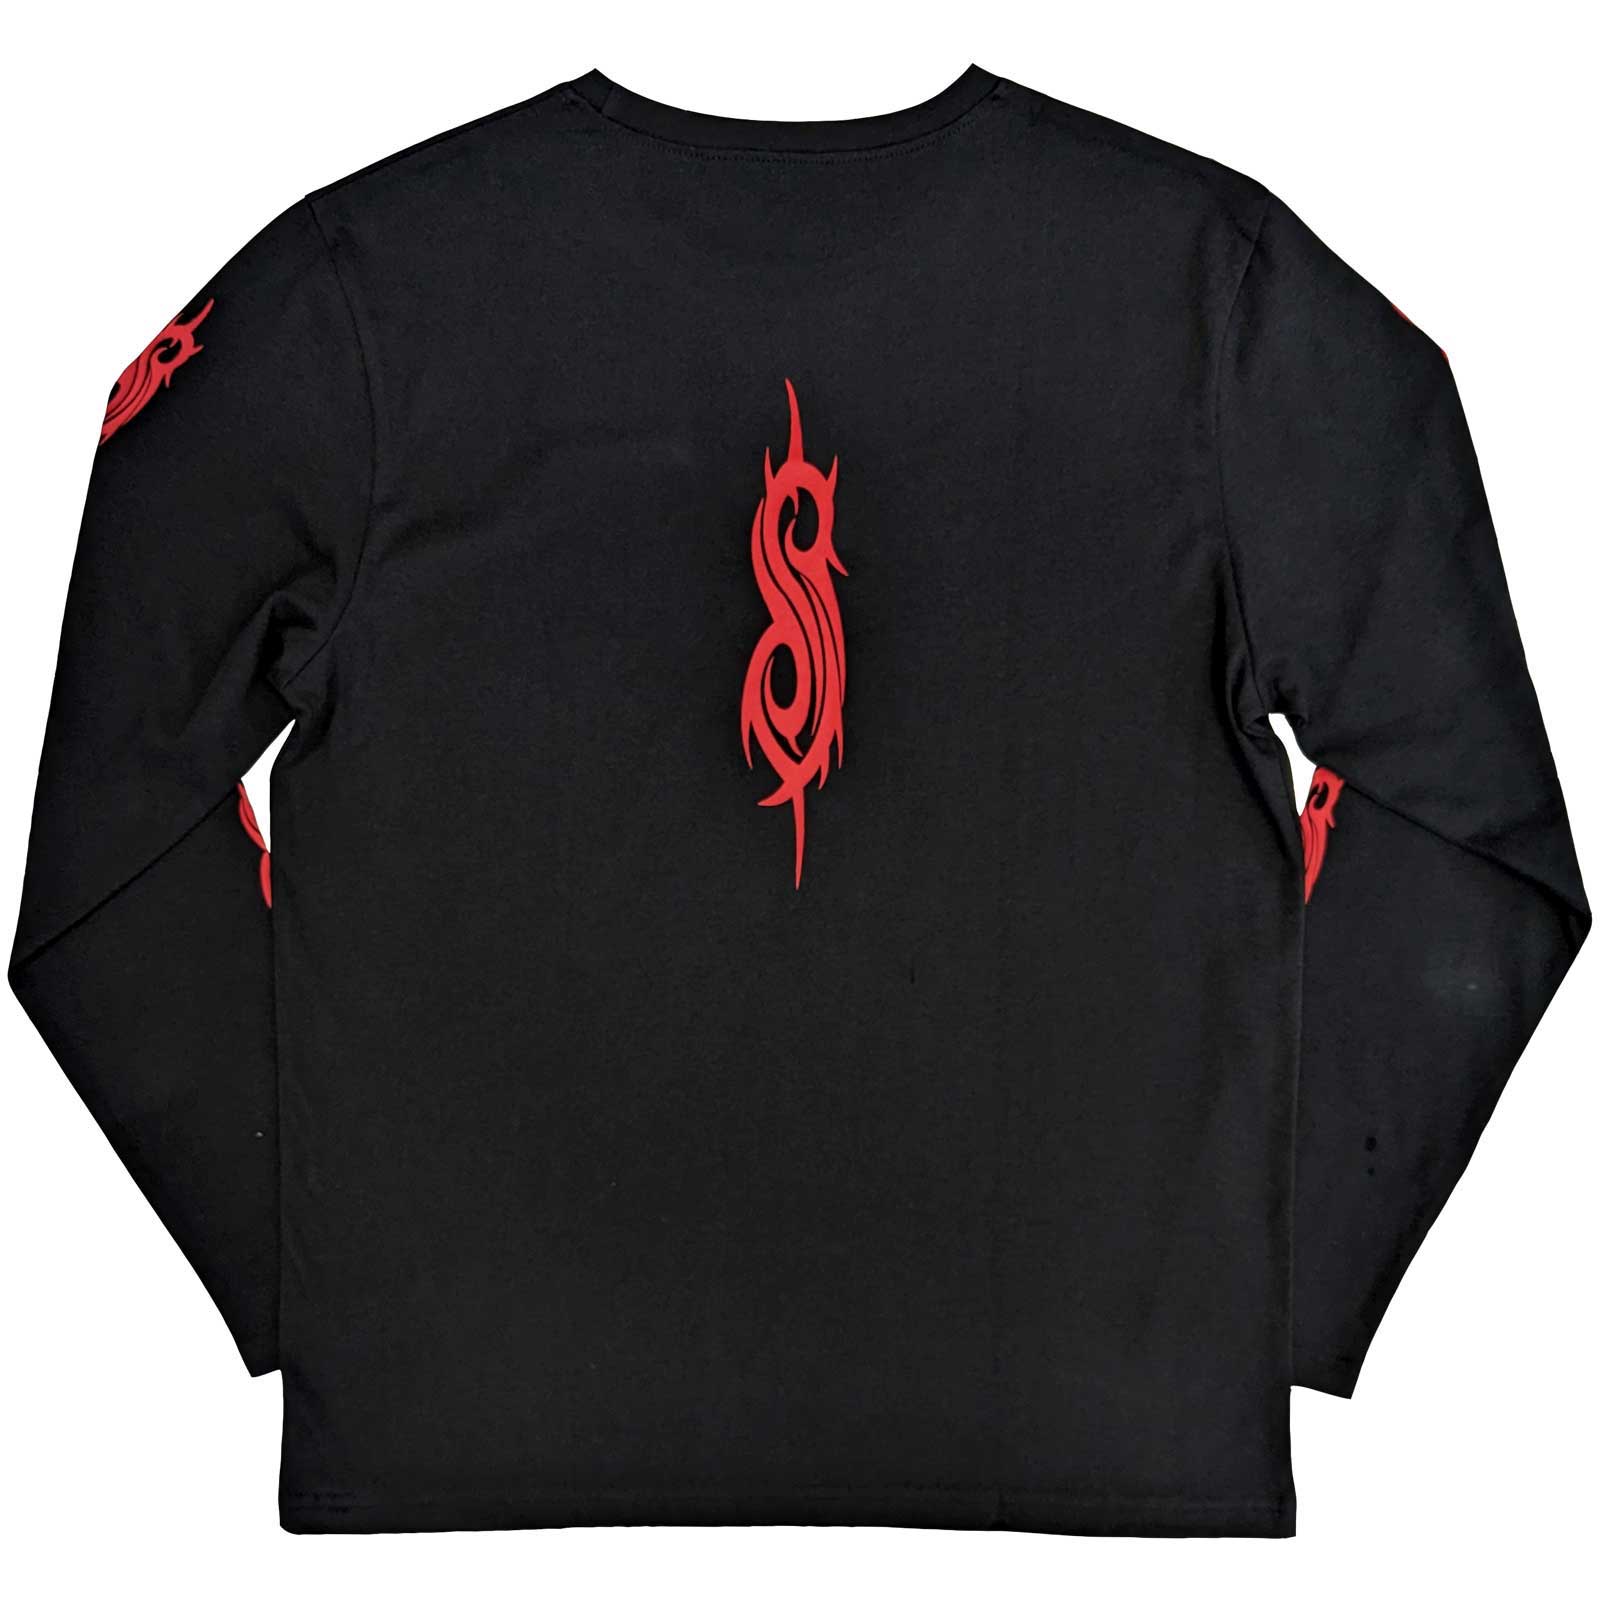 Slipknot Unisex-T-Shirt mit langen Ärmeln – Shrouded Group (Rückendruck) – offizielles Unisex-Lizenzdesign – weltweiter Versand